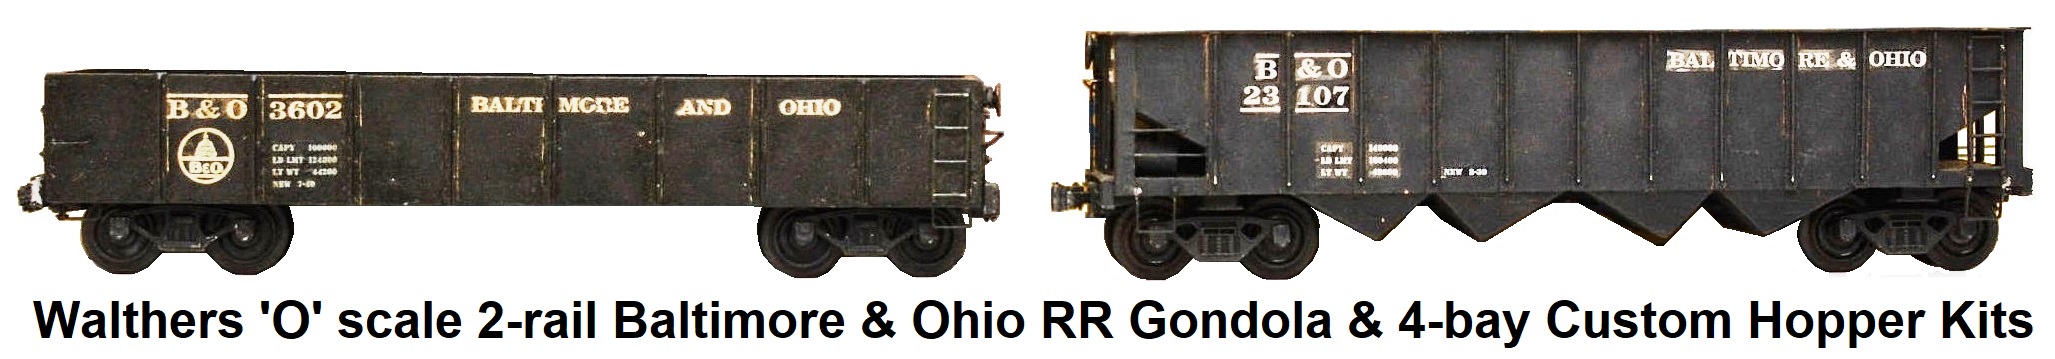 Walthers 'O' scale Kit-built 2-rail B&O RR Gondola & 4-bay Hopper